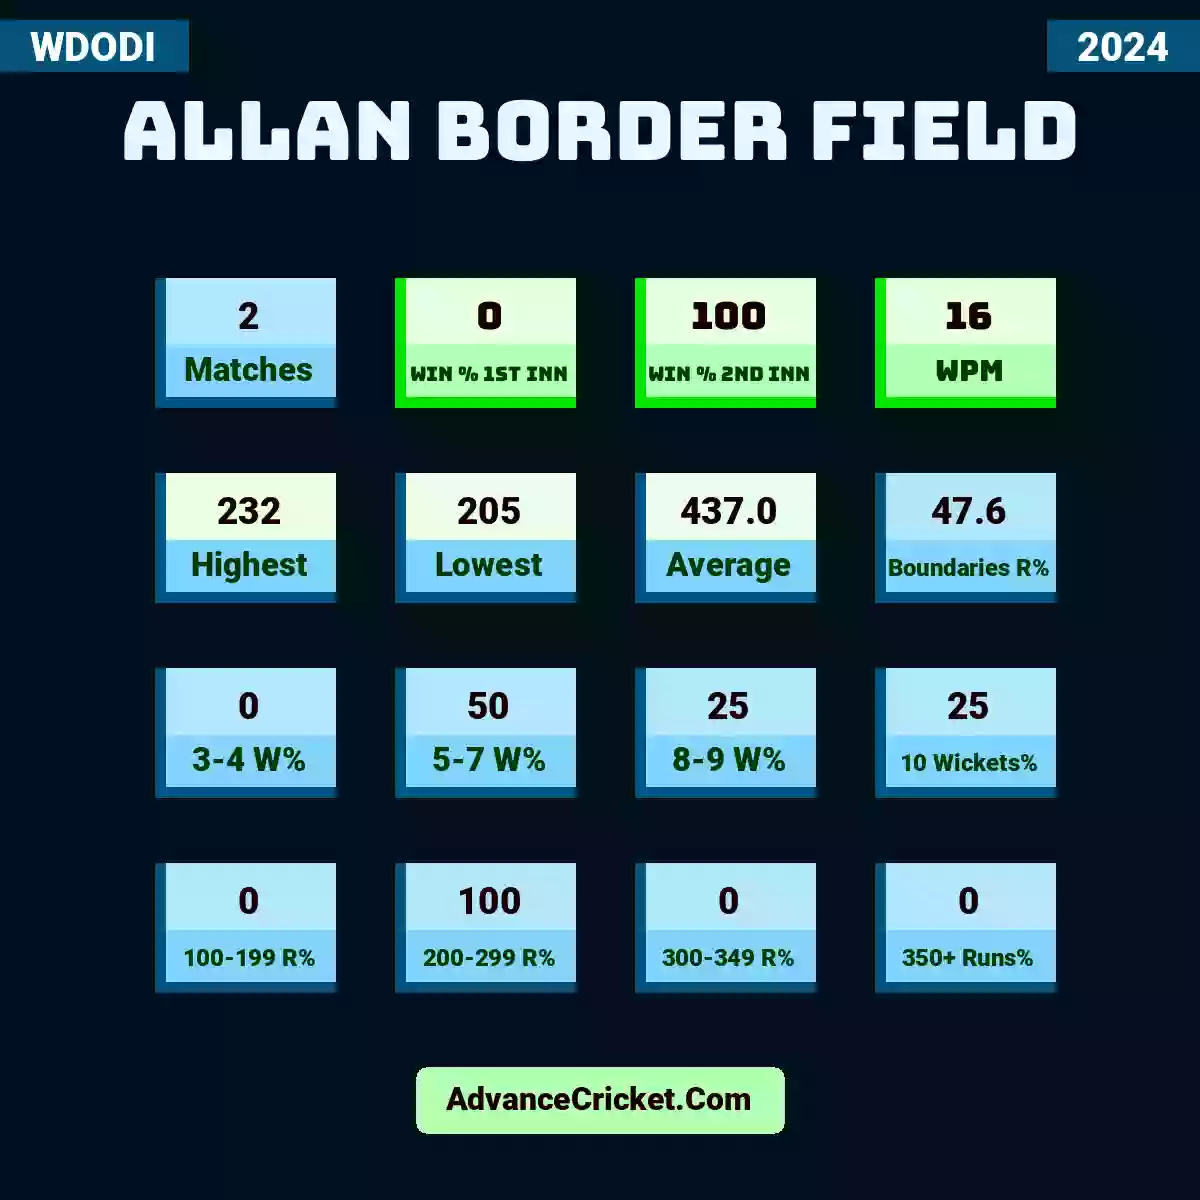 Image showing Allan Border Field with Matches: 2, Win % 1st Inn: 0, Win % 2nd Inn: 100, WPM: 16, Highest: 232, Lowest: 205, Average: 437.0, Boundaries R%: 47.6, 3-4 W%: 0, 5-7 W%: 50, 8-9 W%: 25, 10 Wickets%: 25, 100-199 R%: 0, 200-299 R%: 100, 300-349 R%: 0, 350+ Runs%: 0.